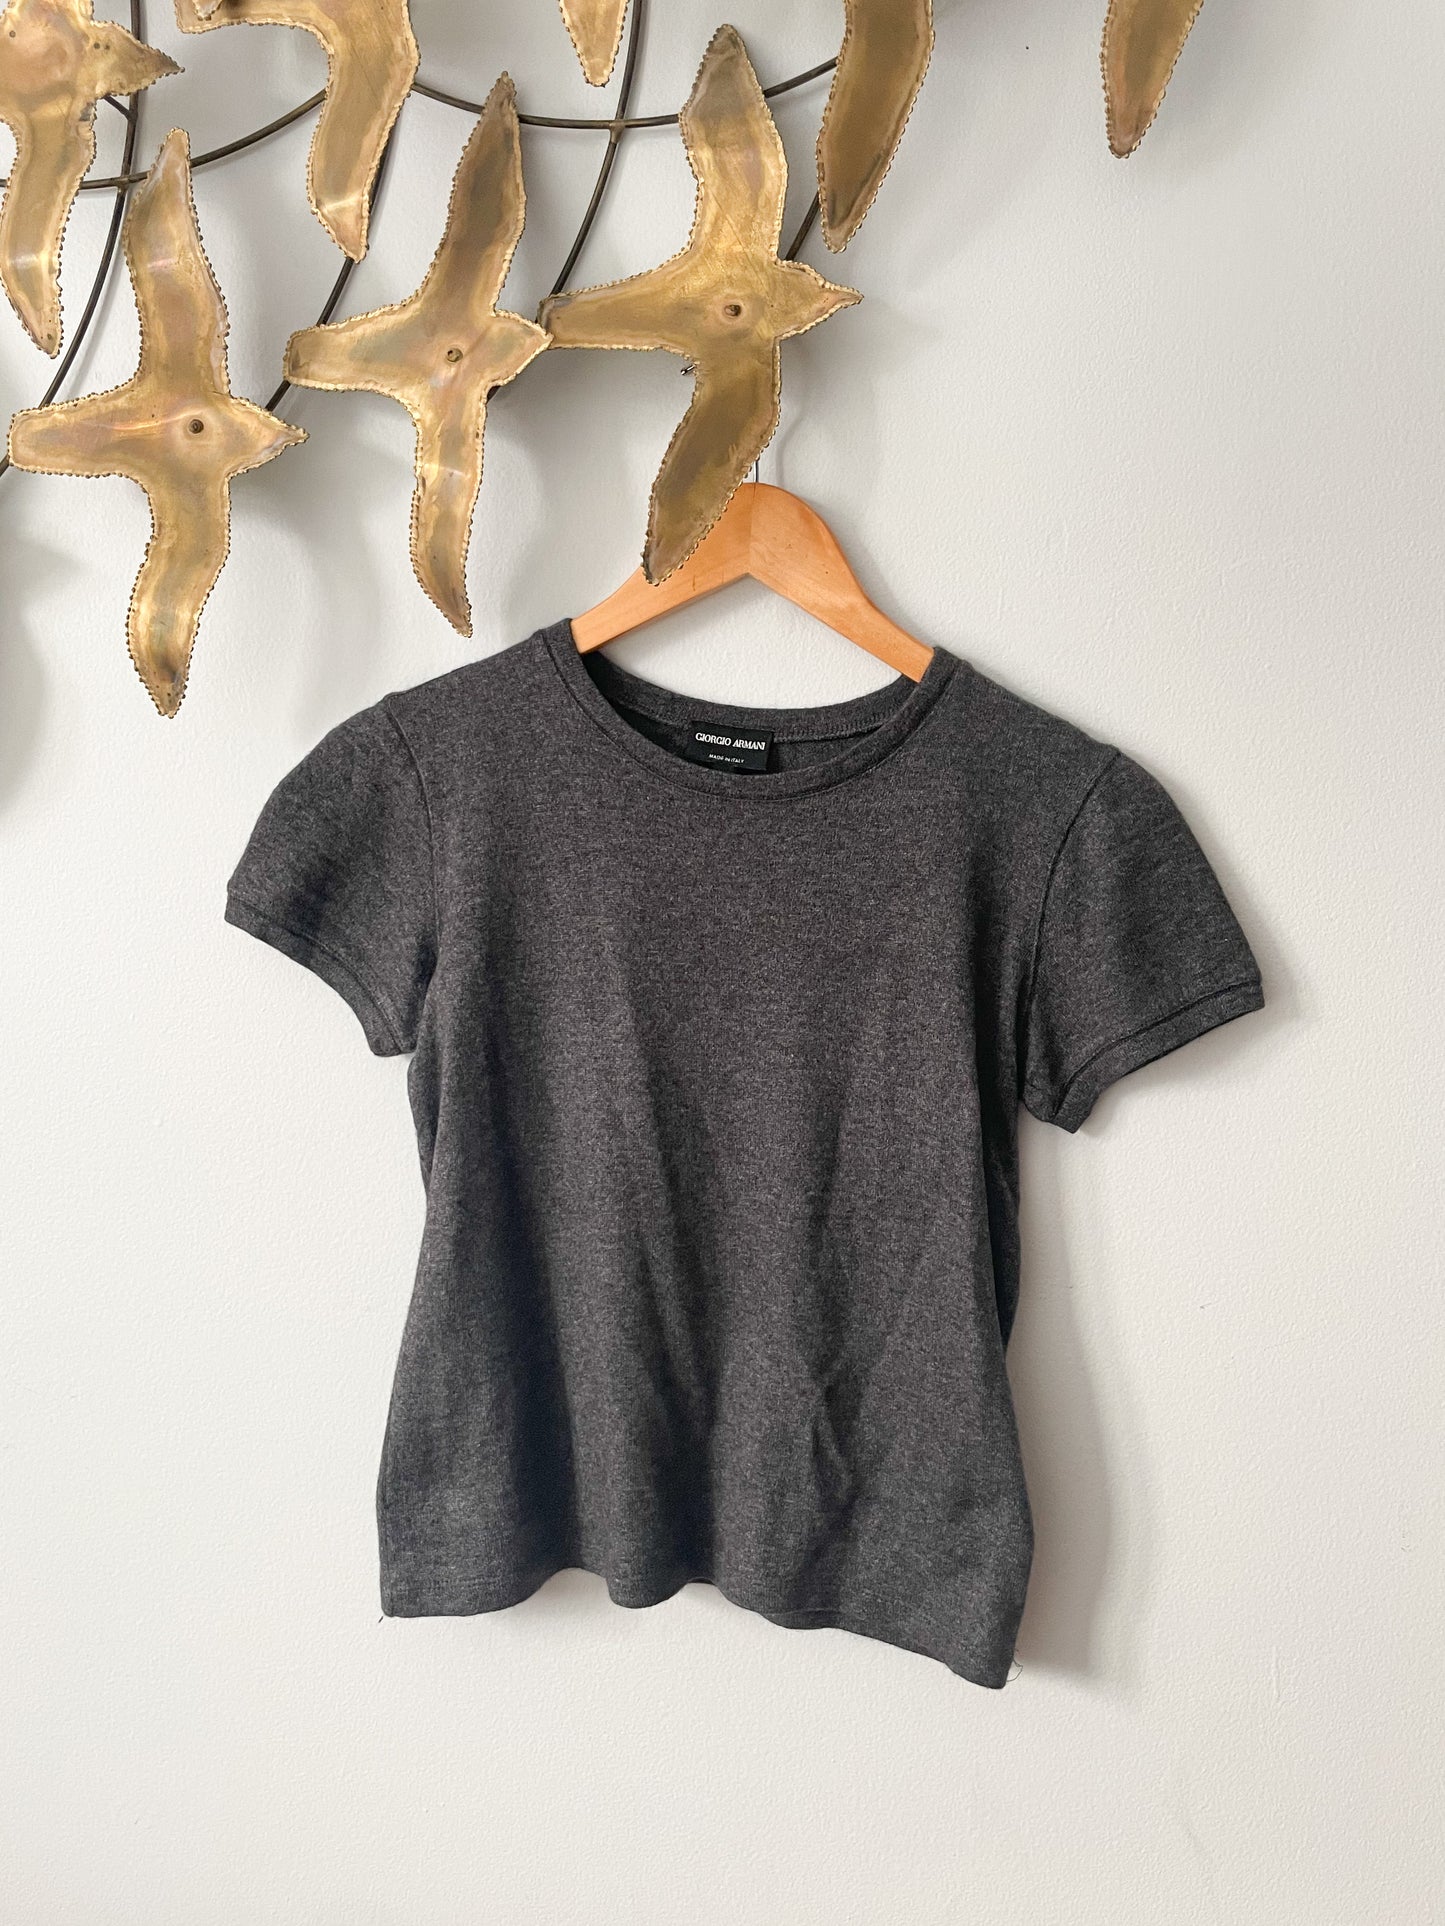 Giorgio Armani Grey Wool Blend Cropped Short Sleeves Jumper T-Shirt - XS/S